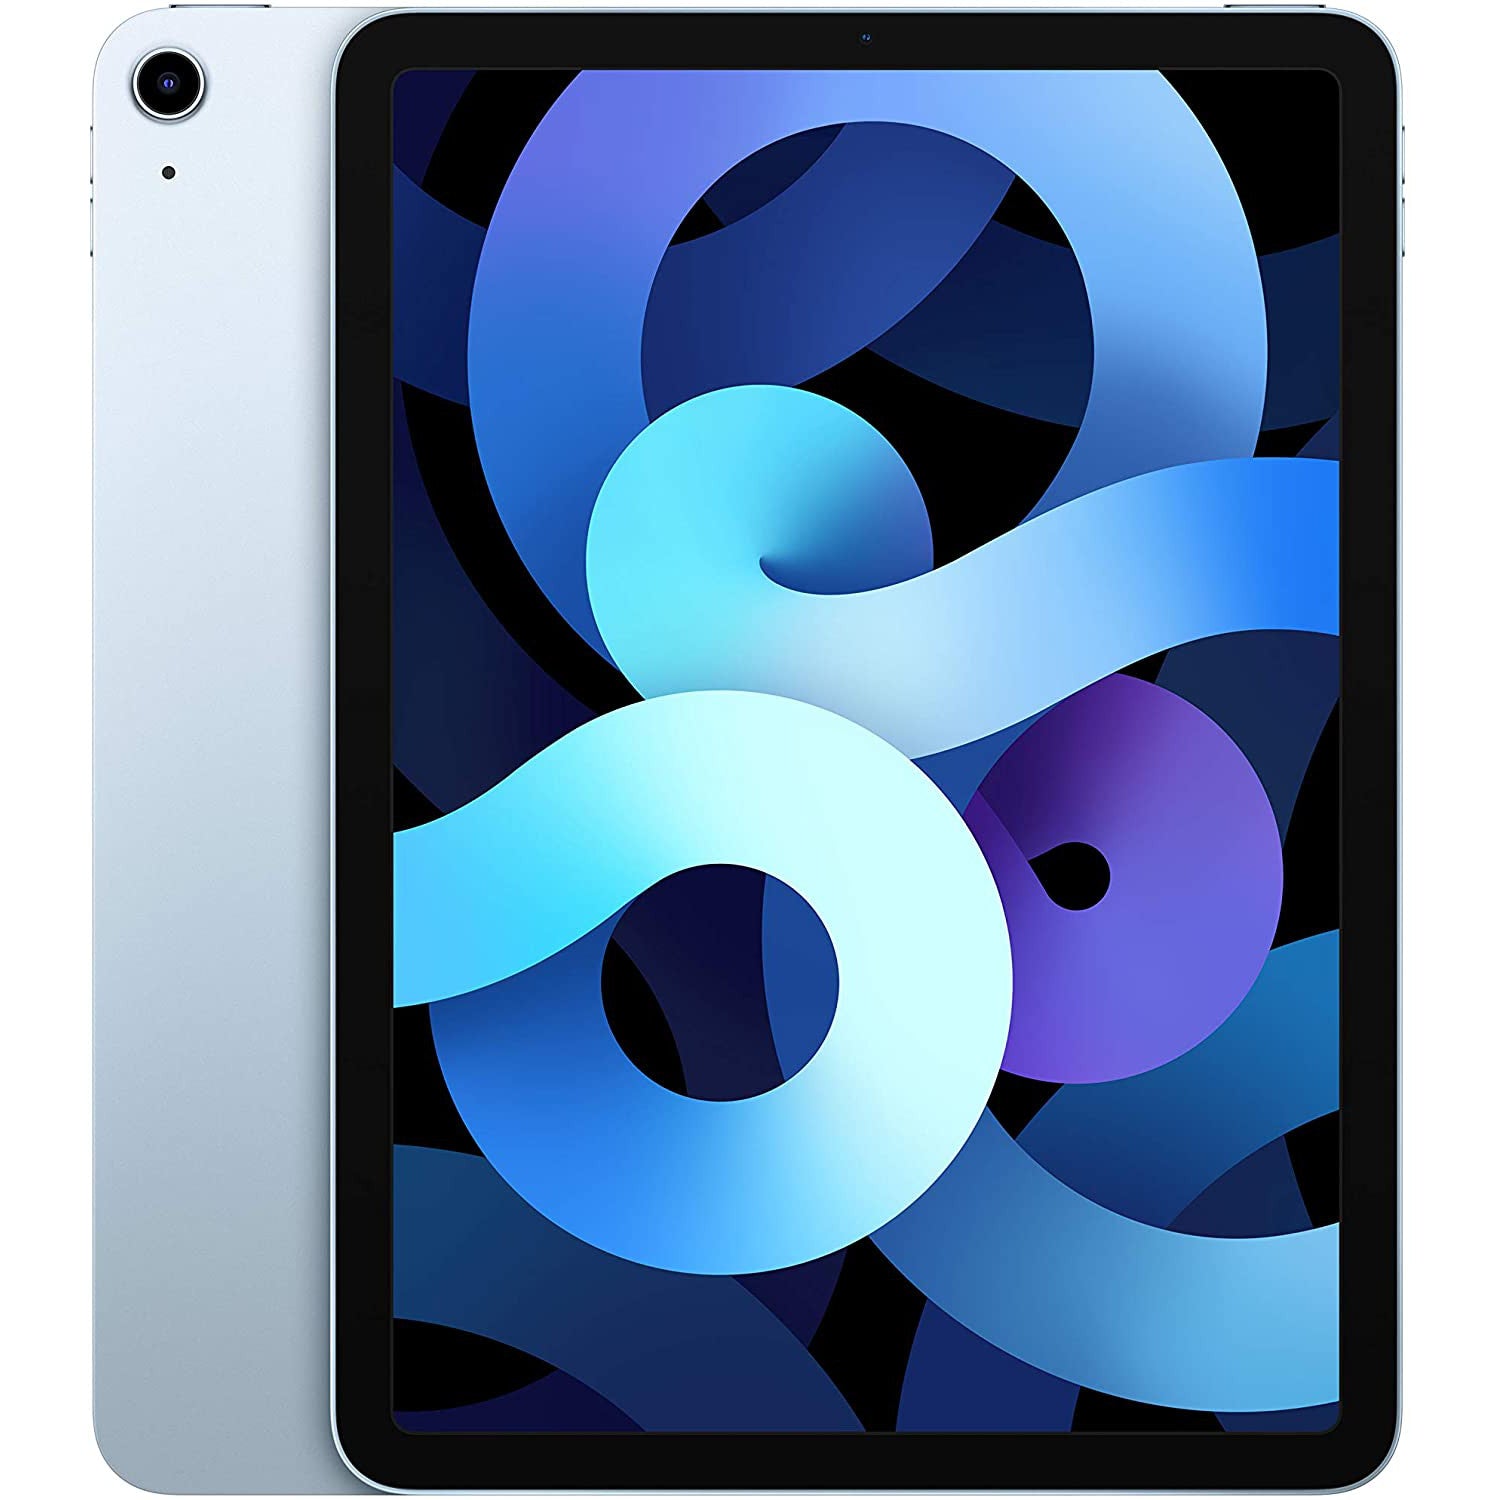 iPad Air 4 64GB WiFi - Blau - Gut